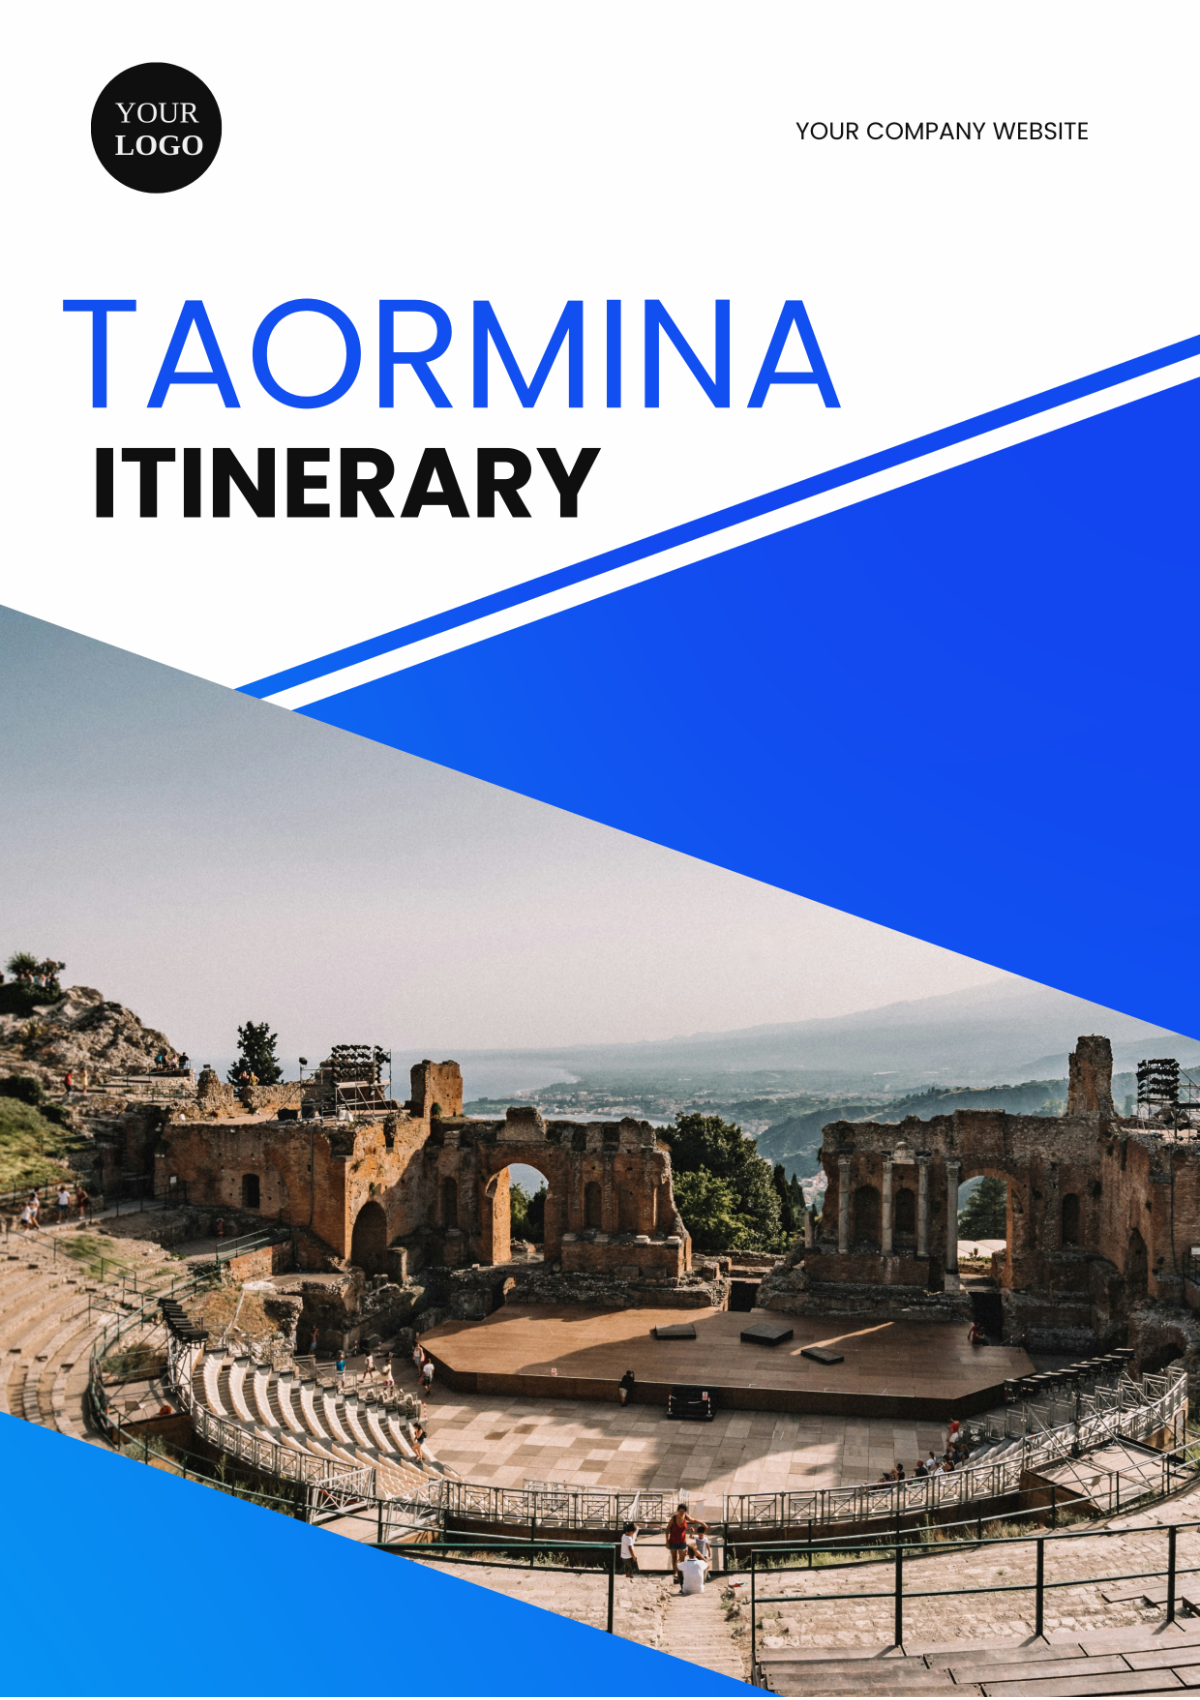 Free Taormina Itinerary Template